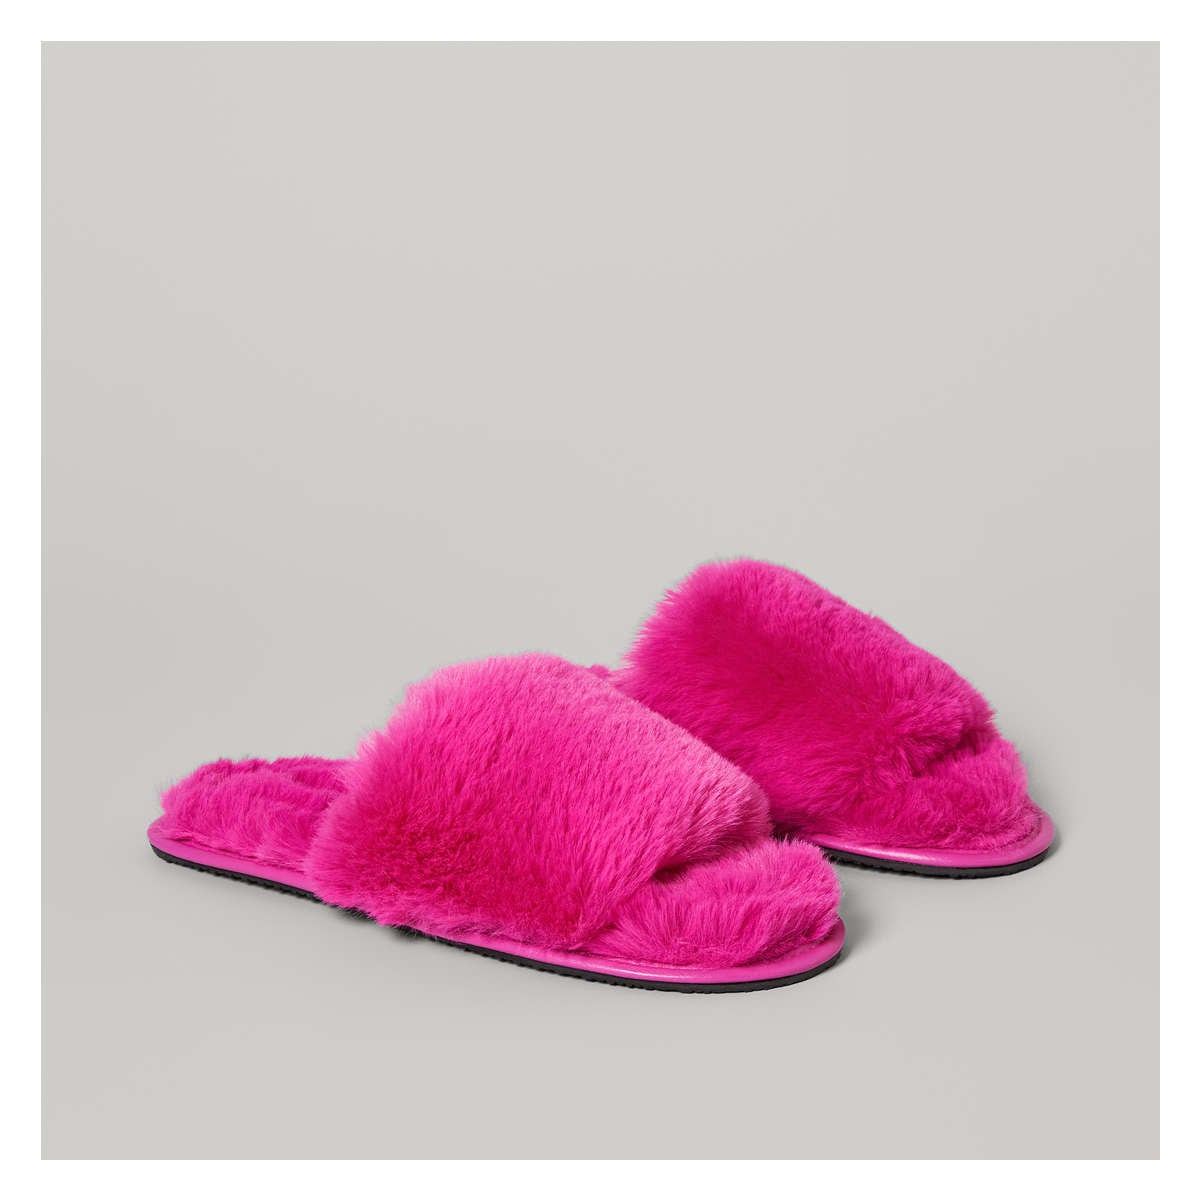 Faux Fur Slippers in Pink from Joe Fresh